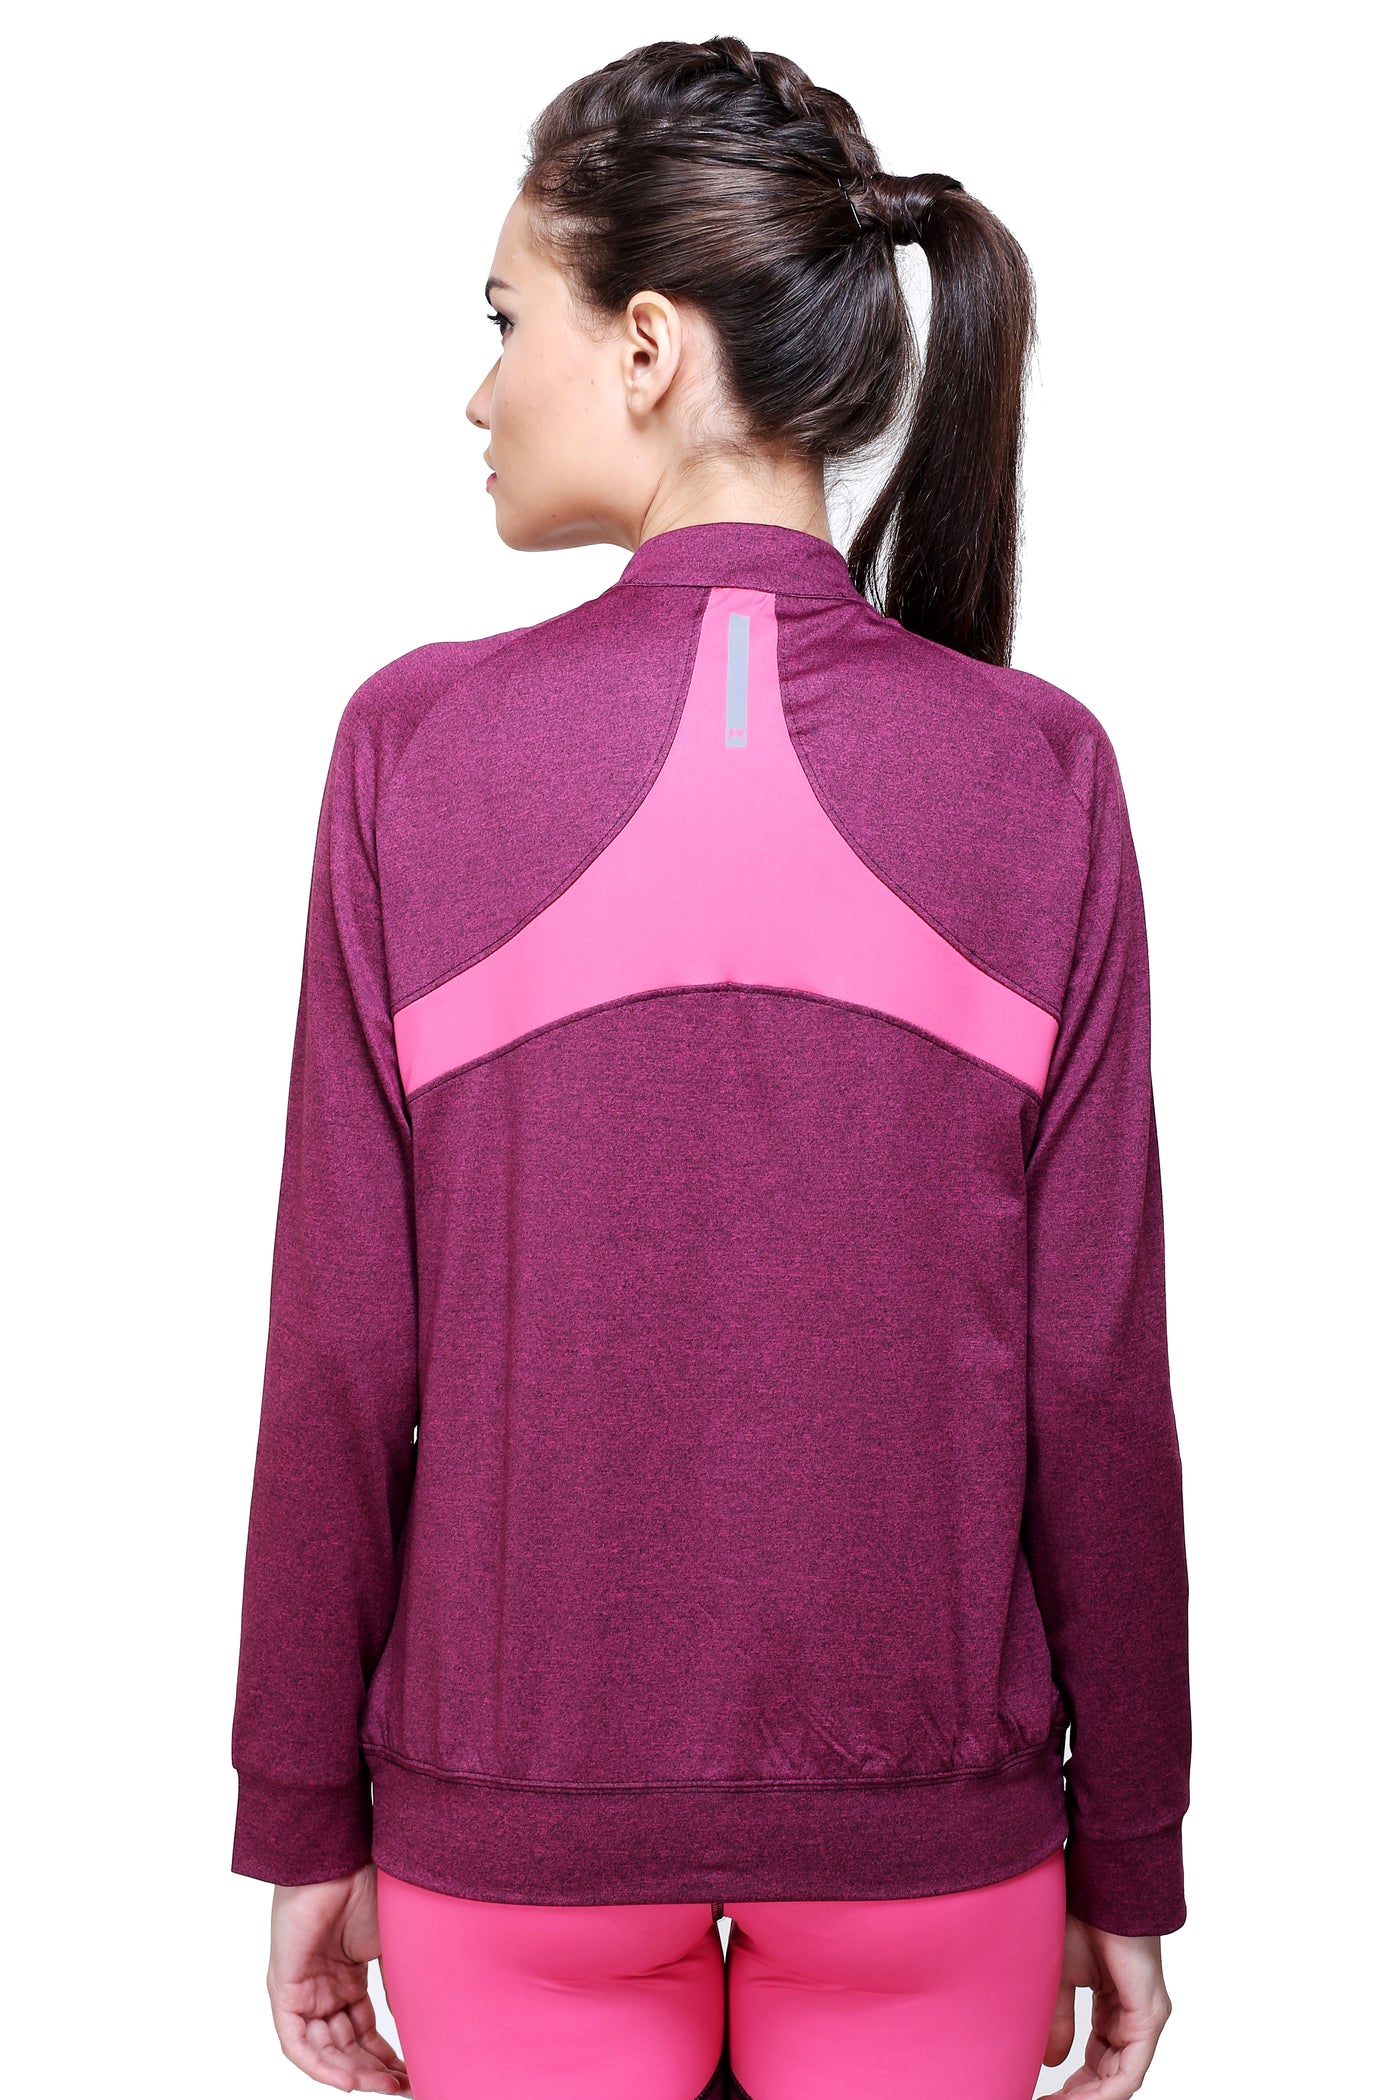 Full Sleeve Wear Music Sweatshirt – Purple